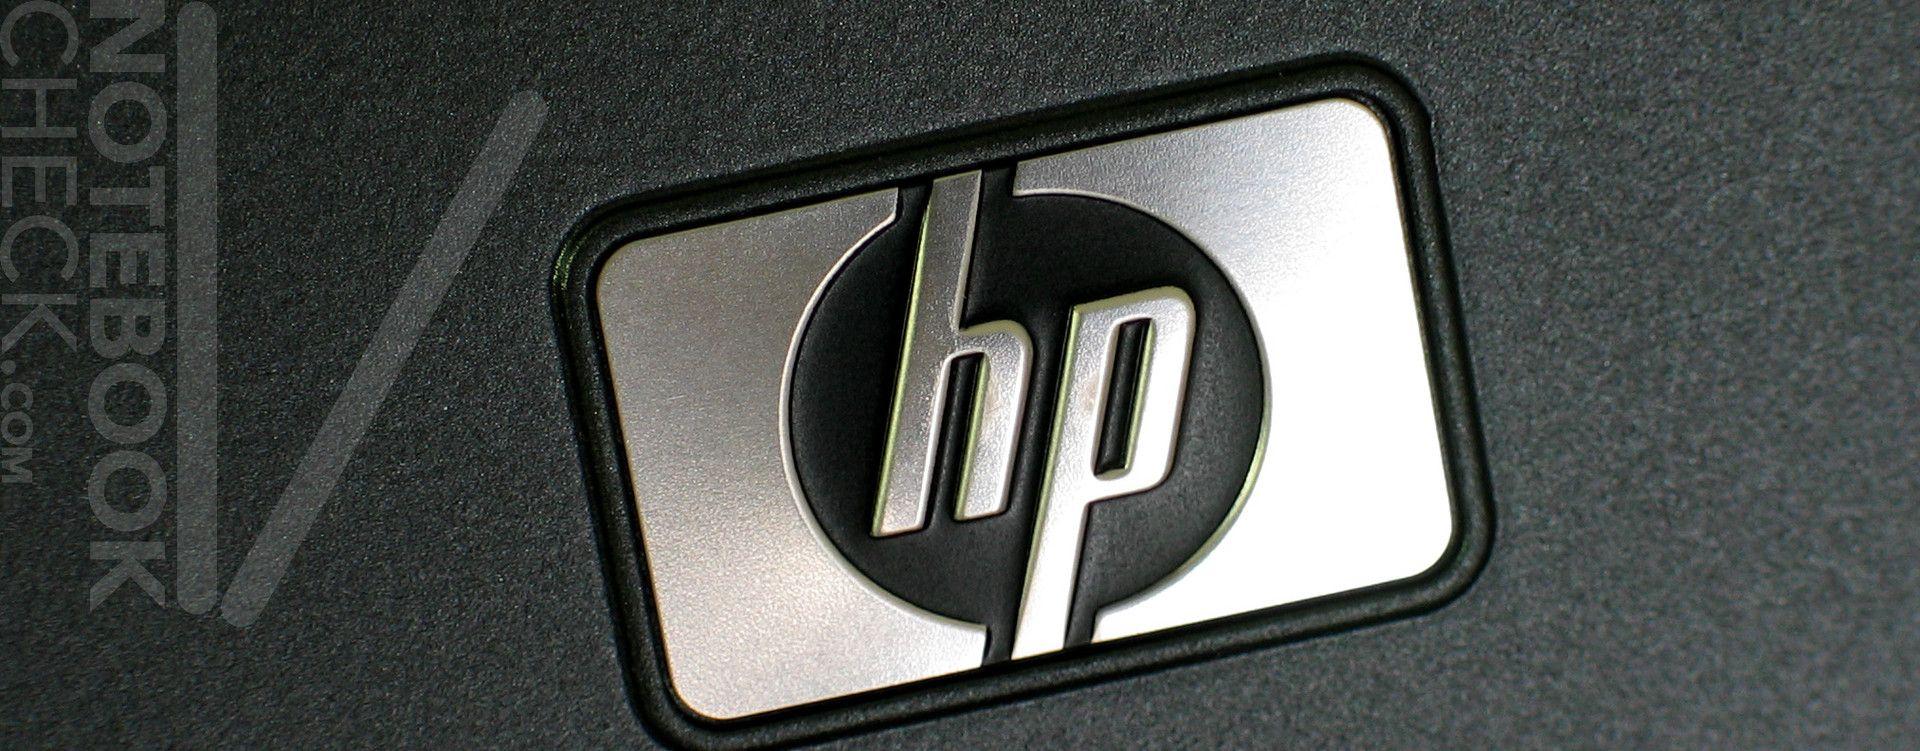 HP Compaq Logo - Review HP Compaq nc8430 Notebook - NotebookCheck.net Reviews